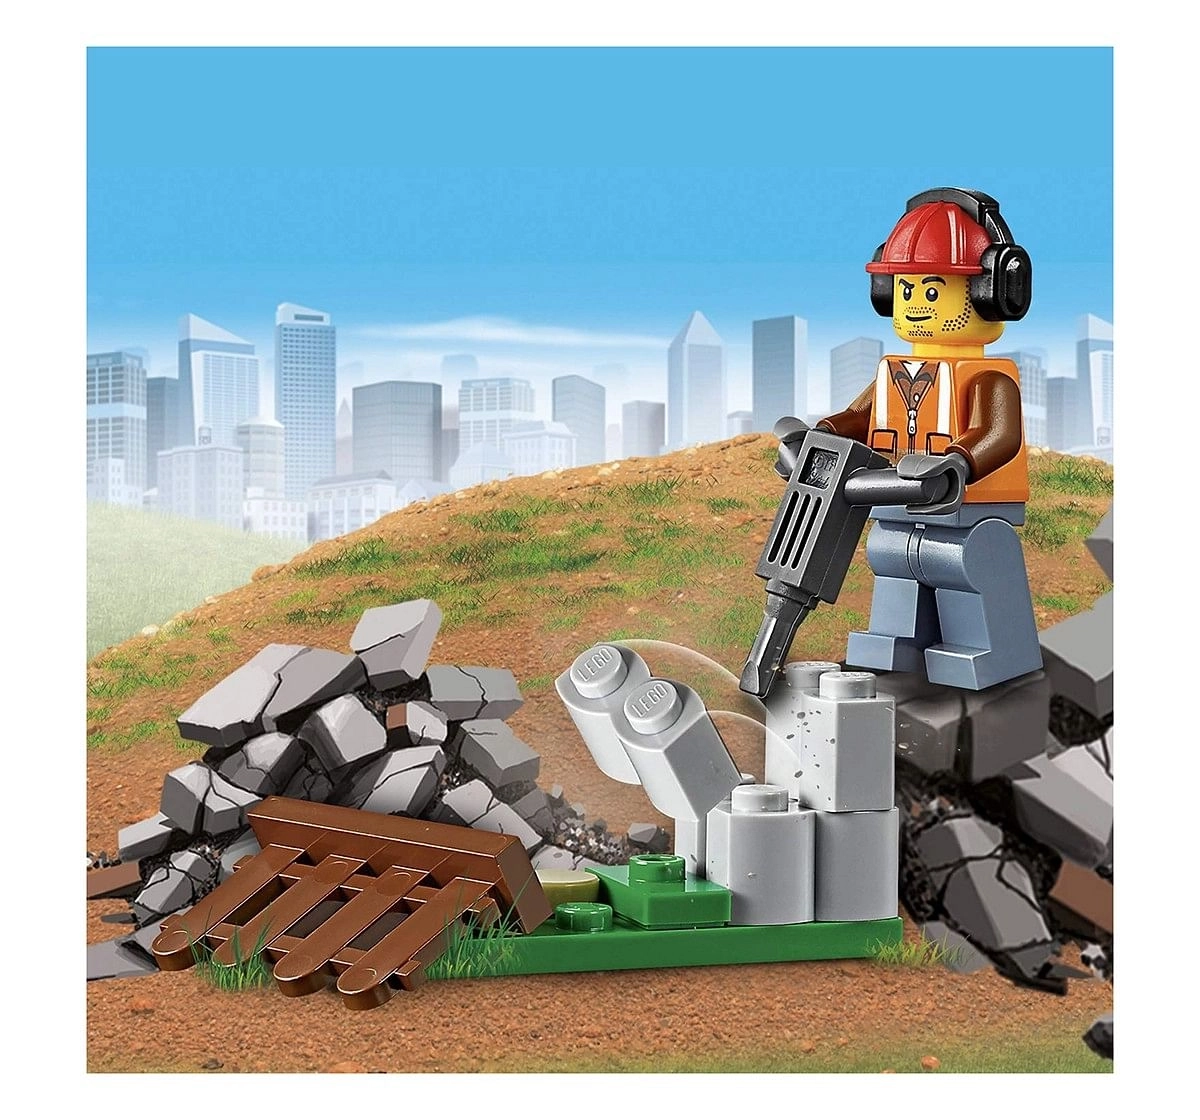  Lego City Construction Loader Building Blocks (88 Pcs) 60219  for Kids age 5Y+ 